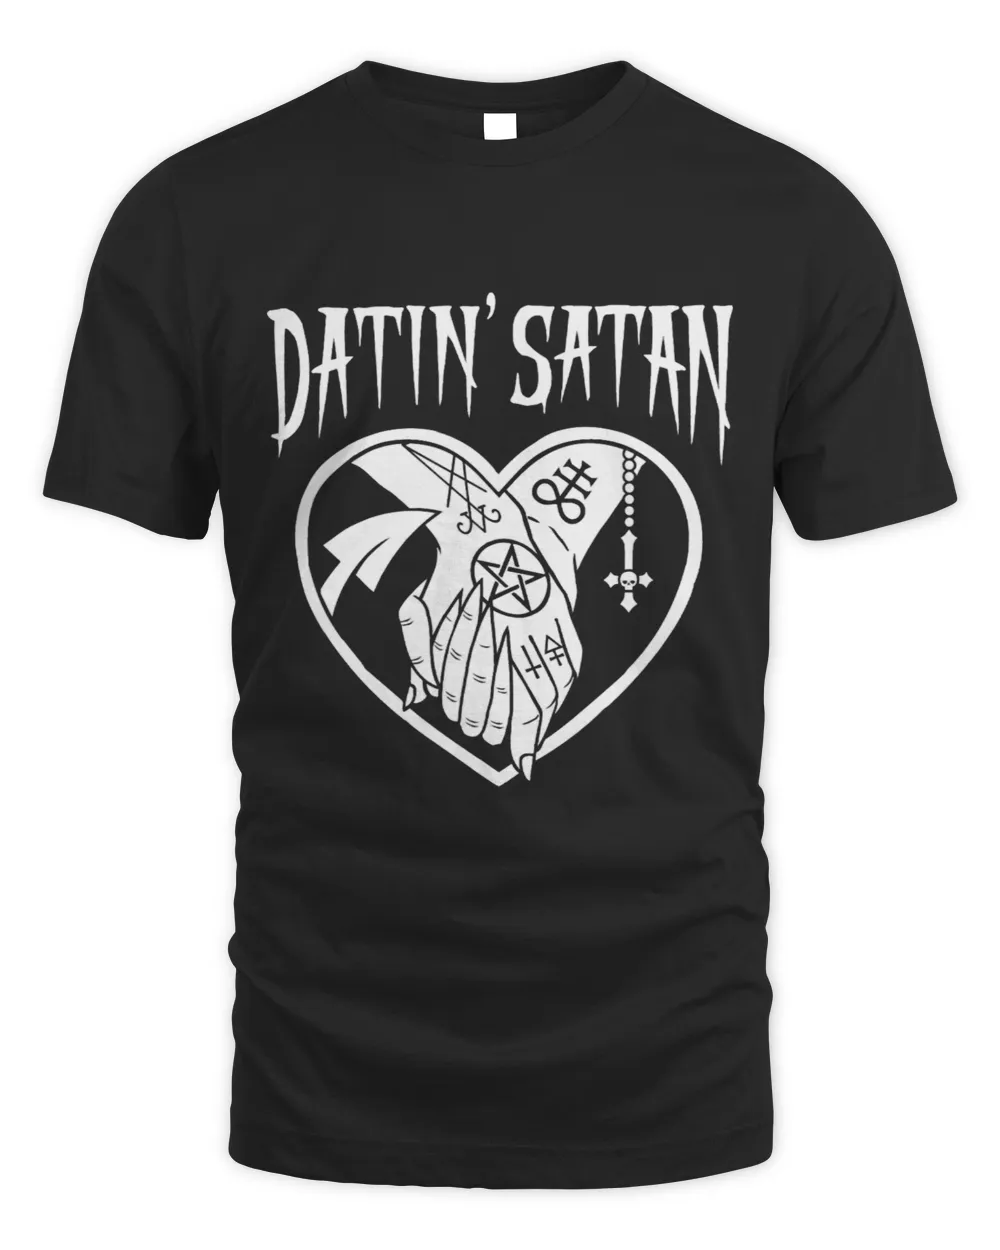 Tattoo Ink Datin Satan Heart Shape with Satanic Tattooed Hands Holding